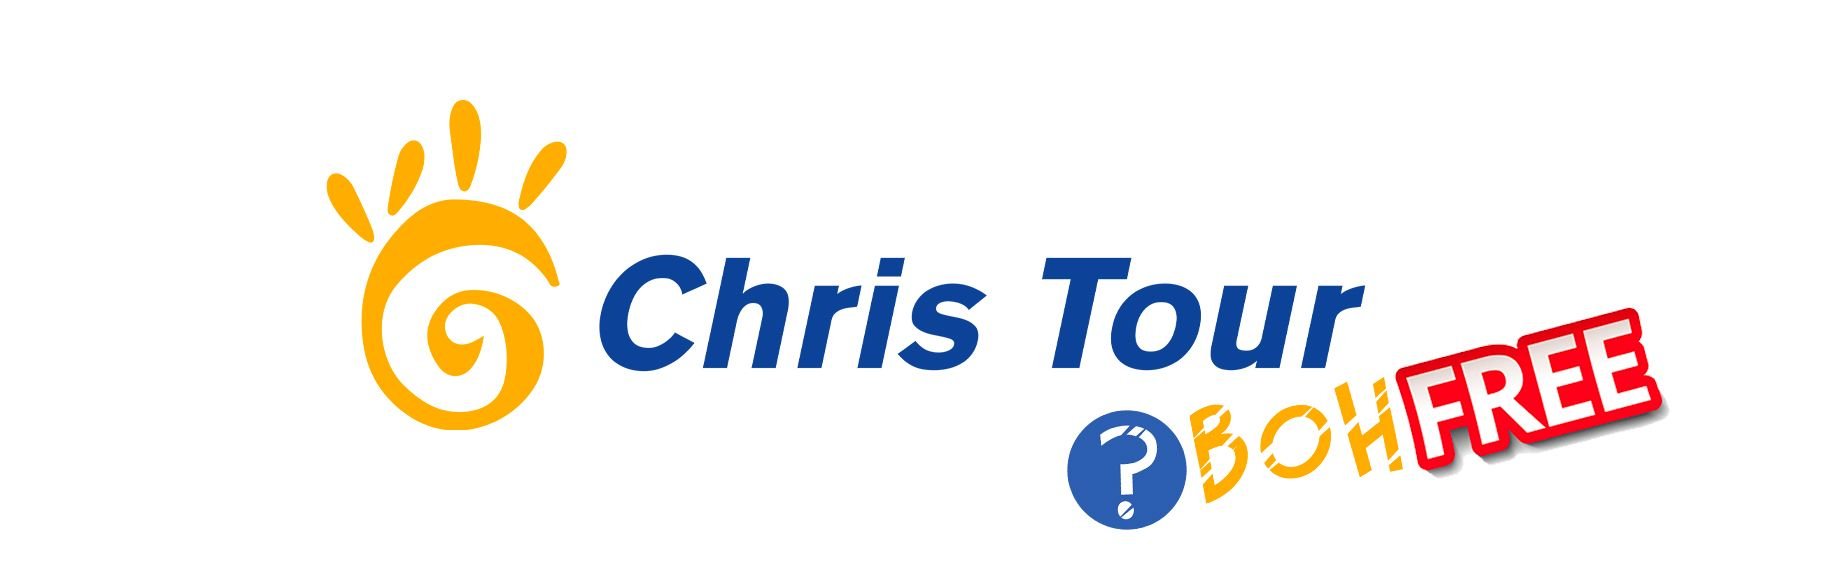 chris-tour-boh-free-new